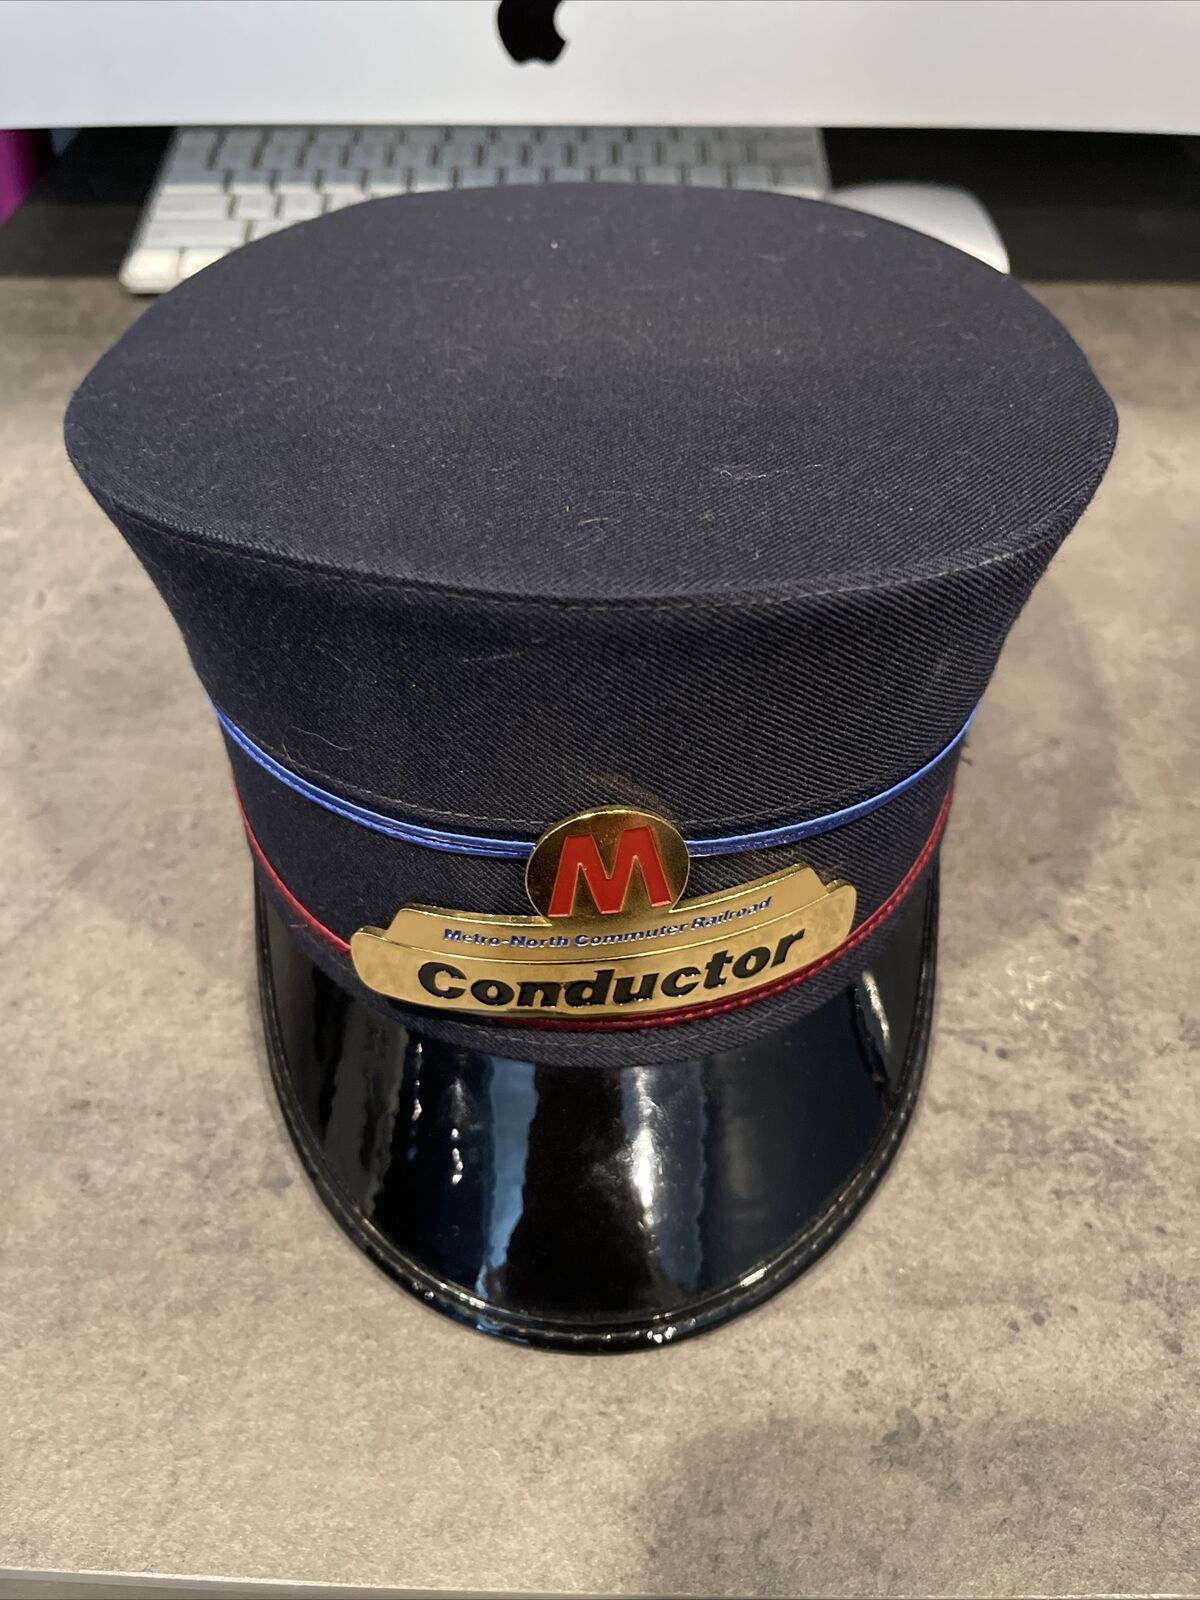 Metro north Railroad Conductor Hat Obsolete